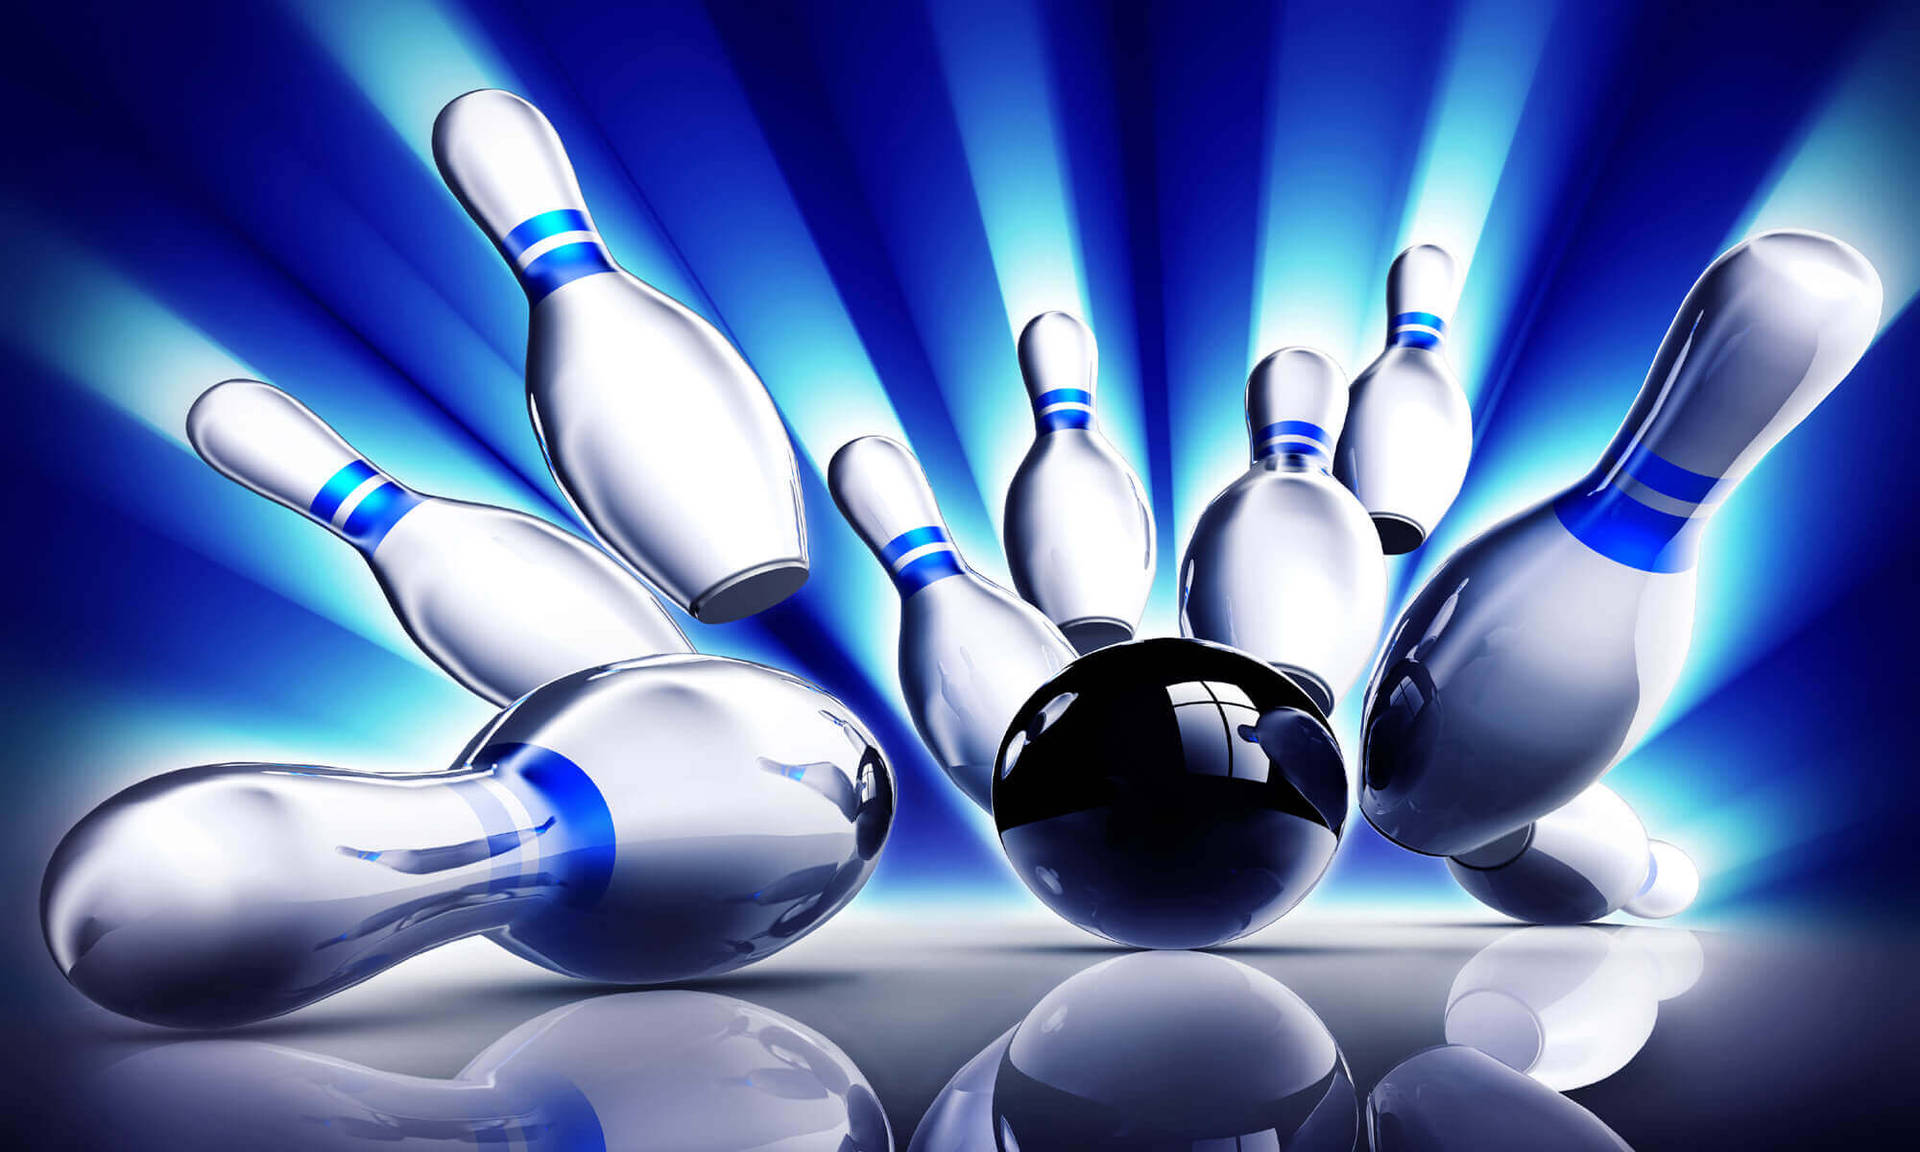 Download Animated Bowling Strike Wallpaper